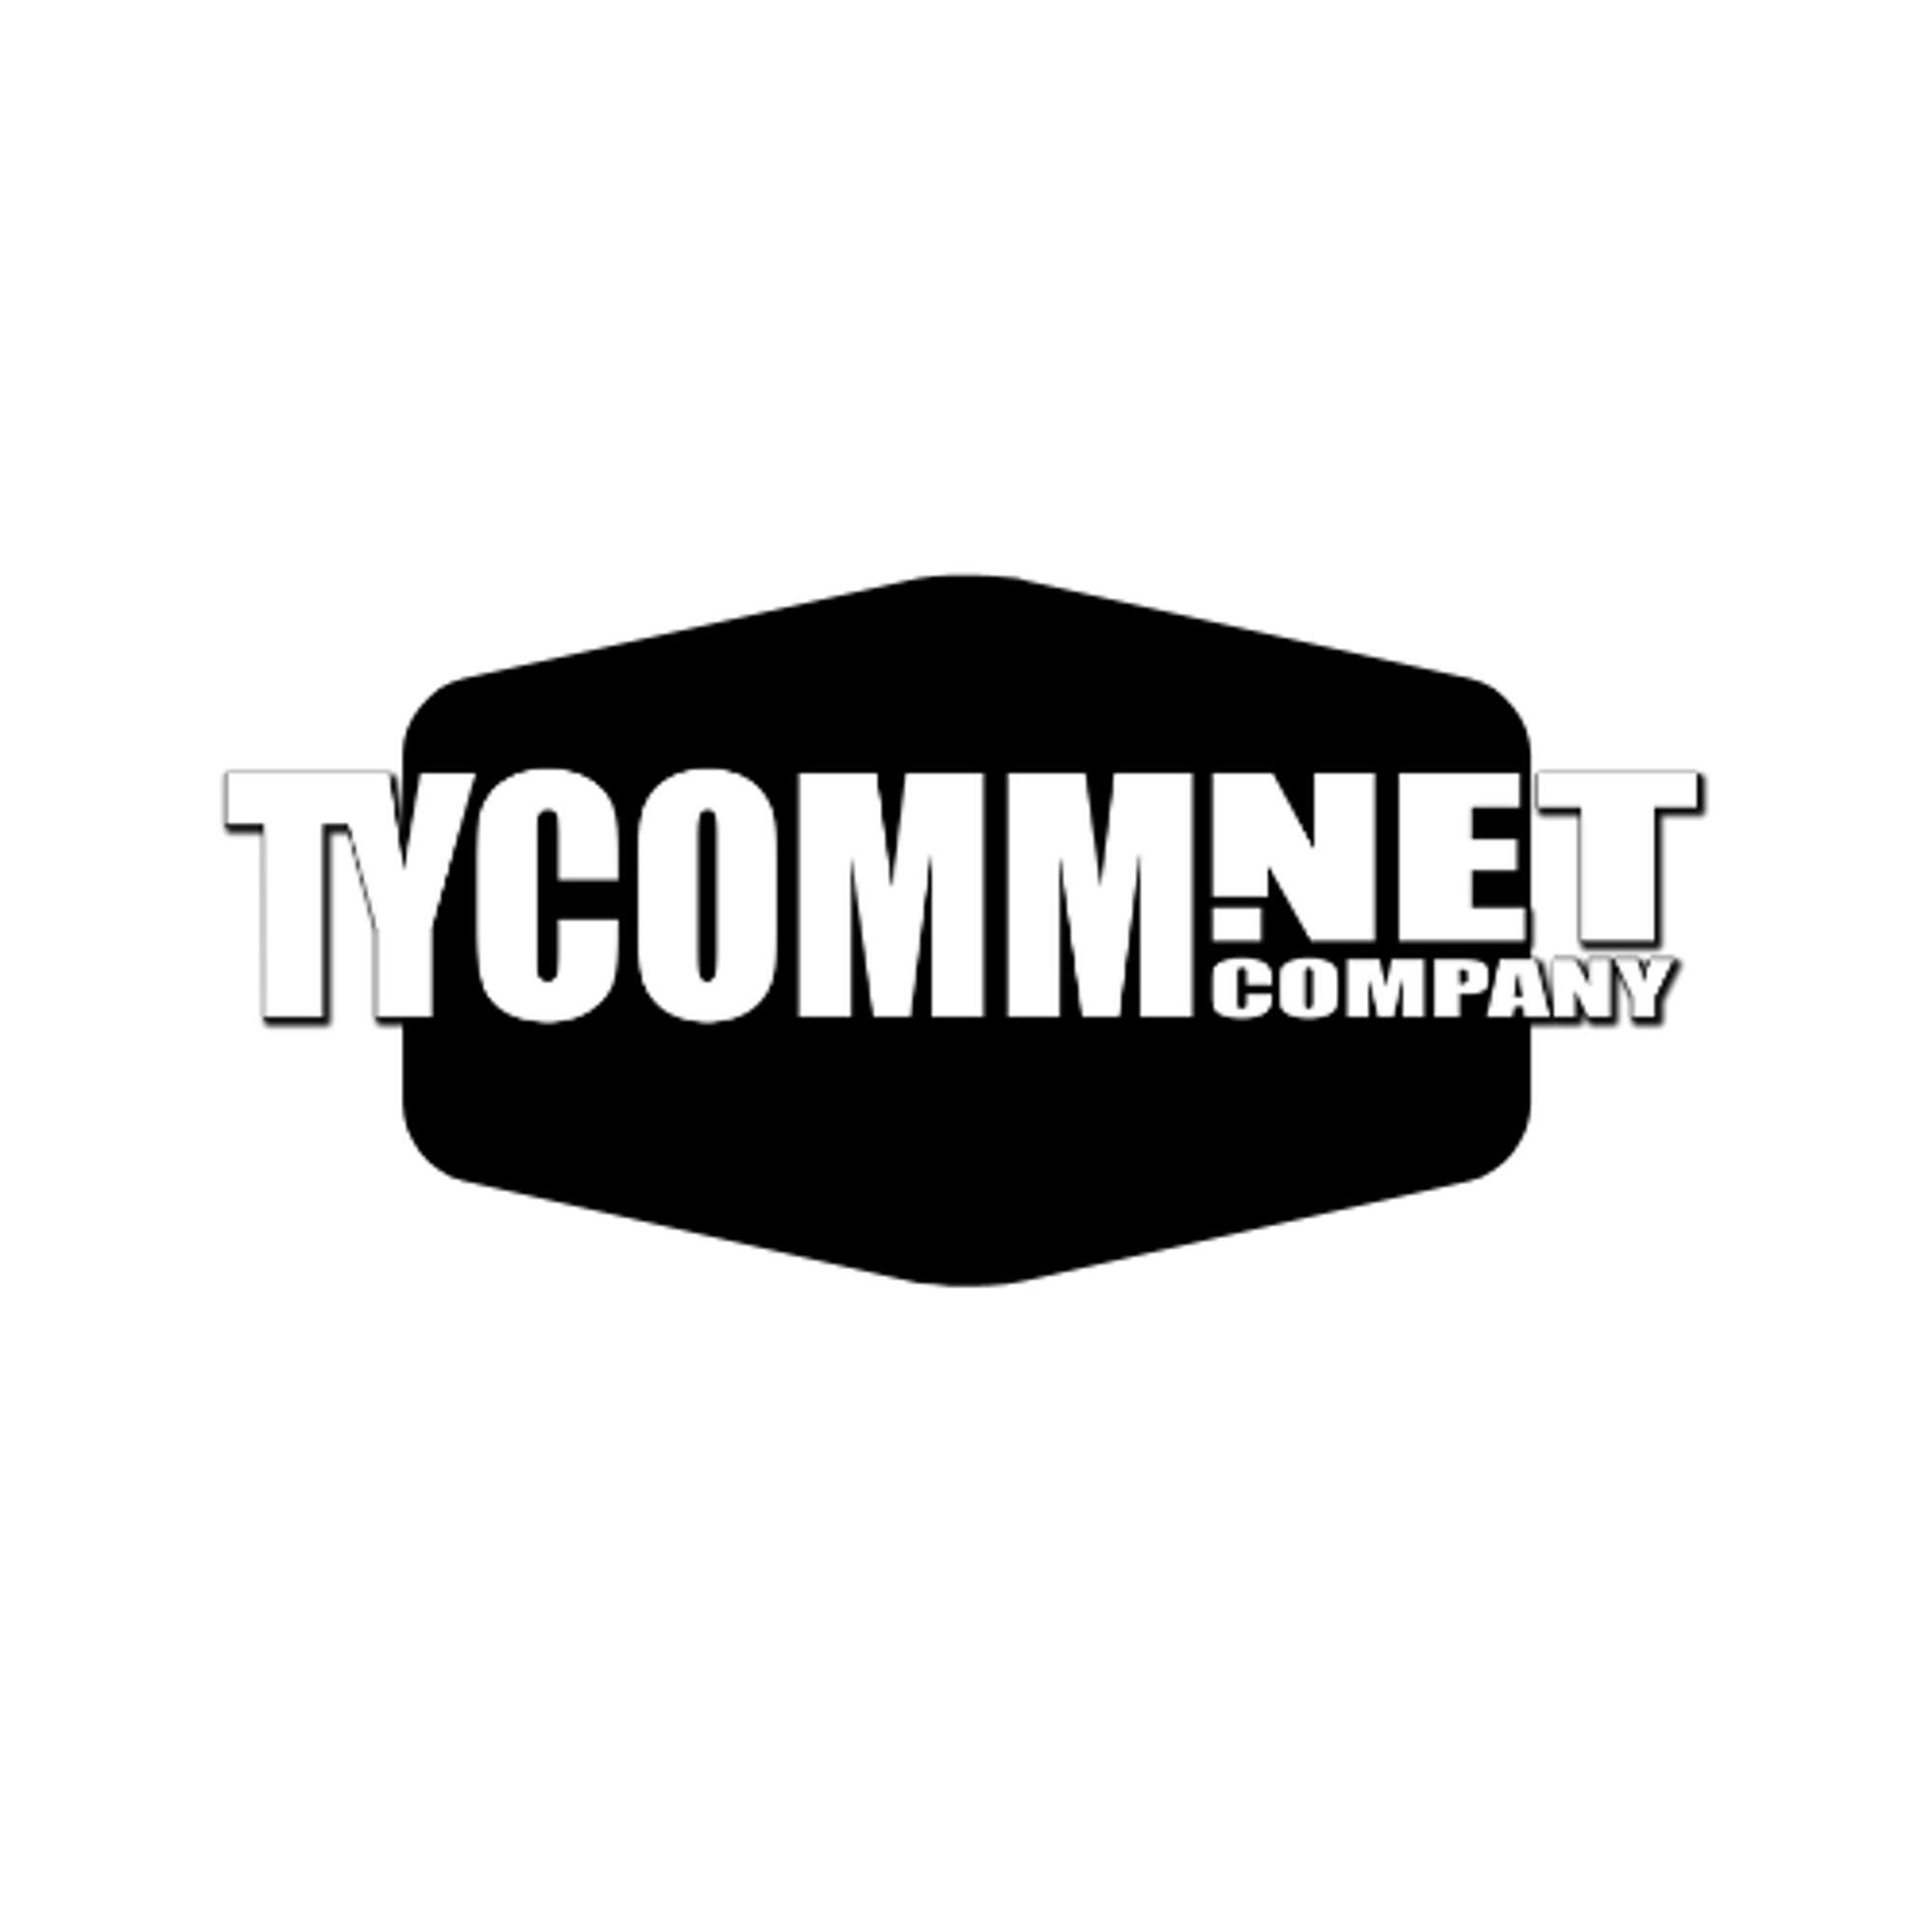 Tycomm.Net Company